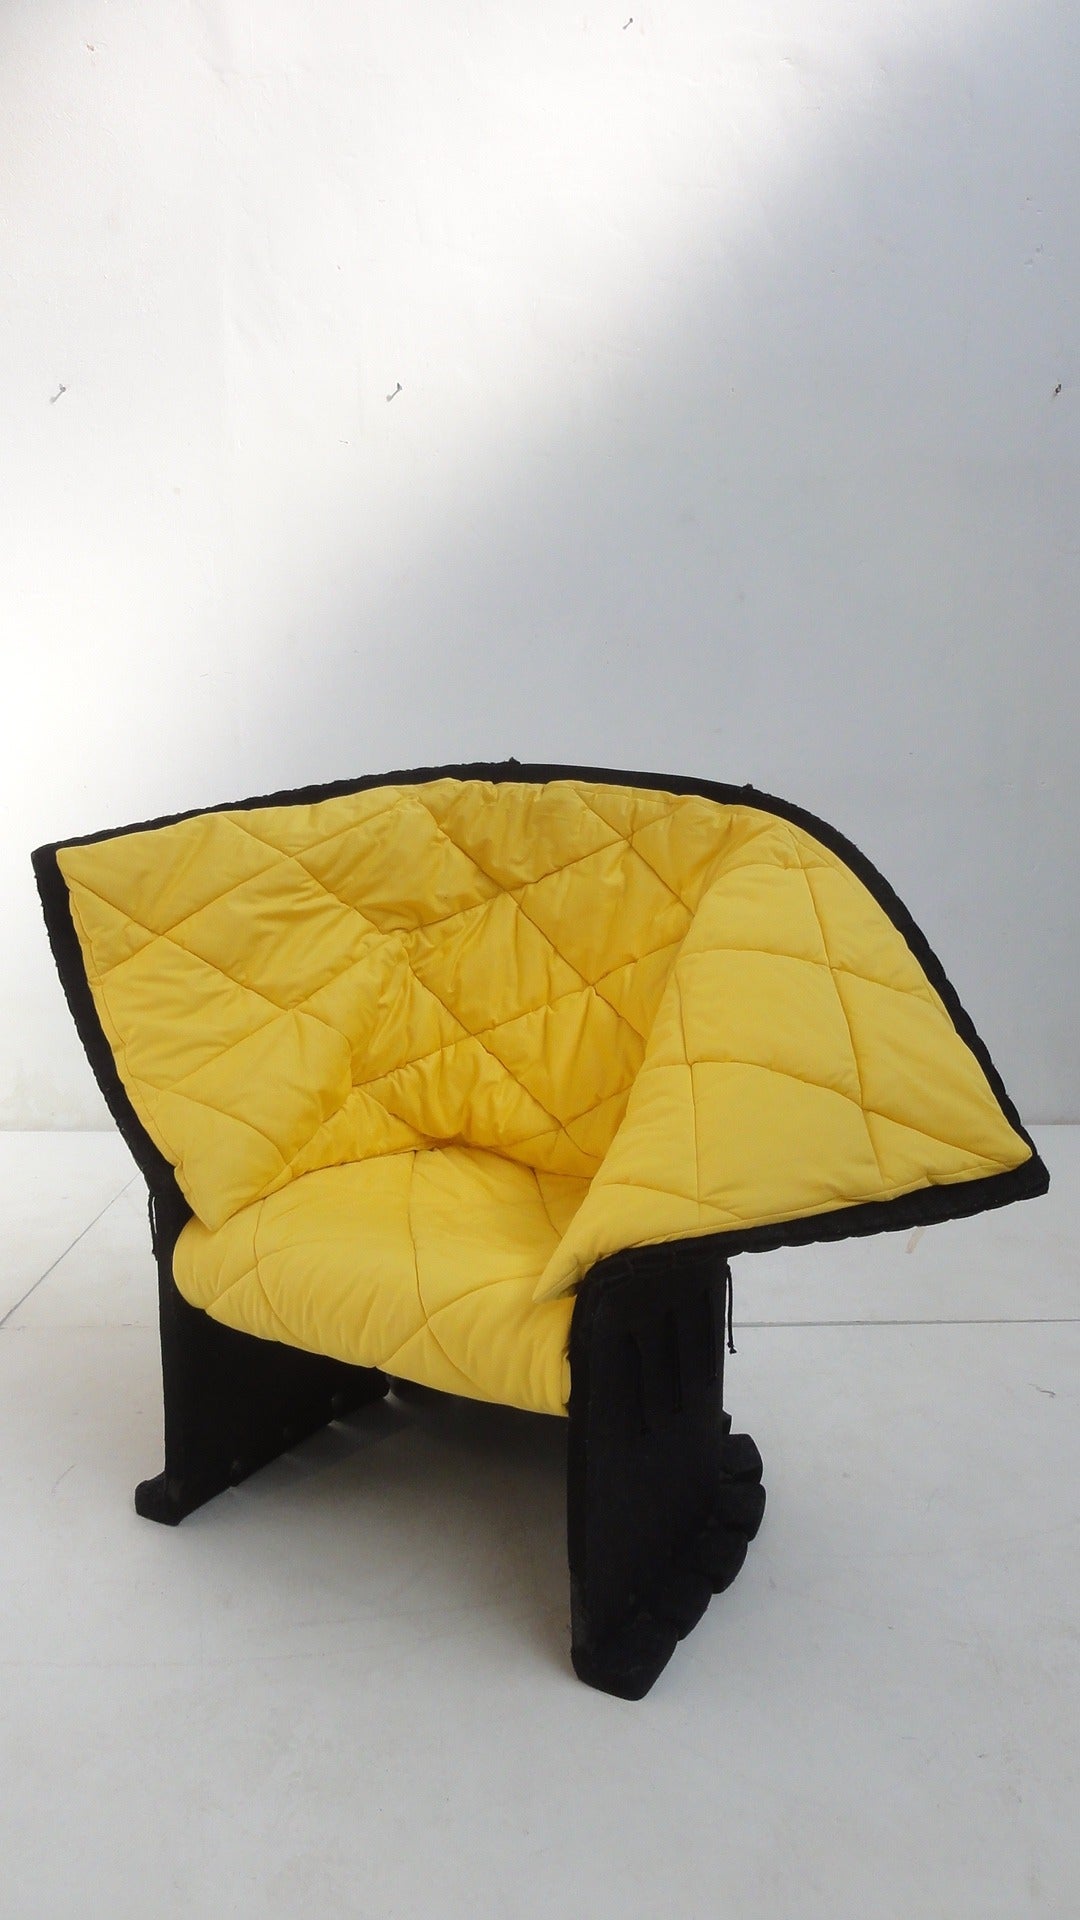 Cotton Gaetano Pesce 'Feltri' Chair for Cassina, Italy, 1987